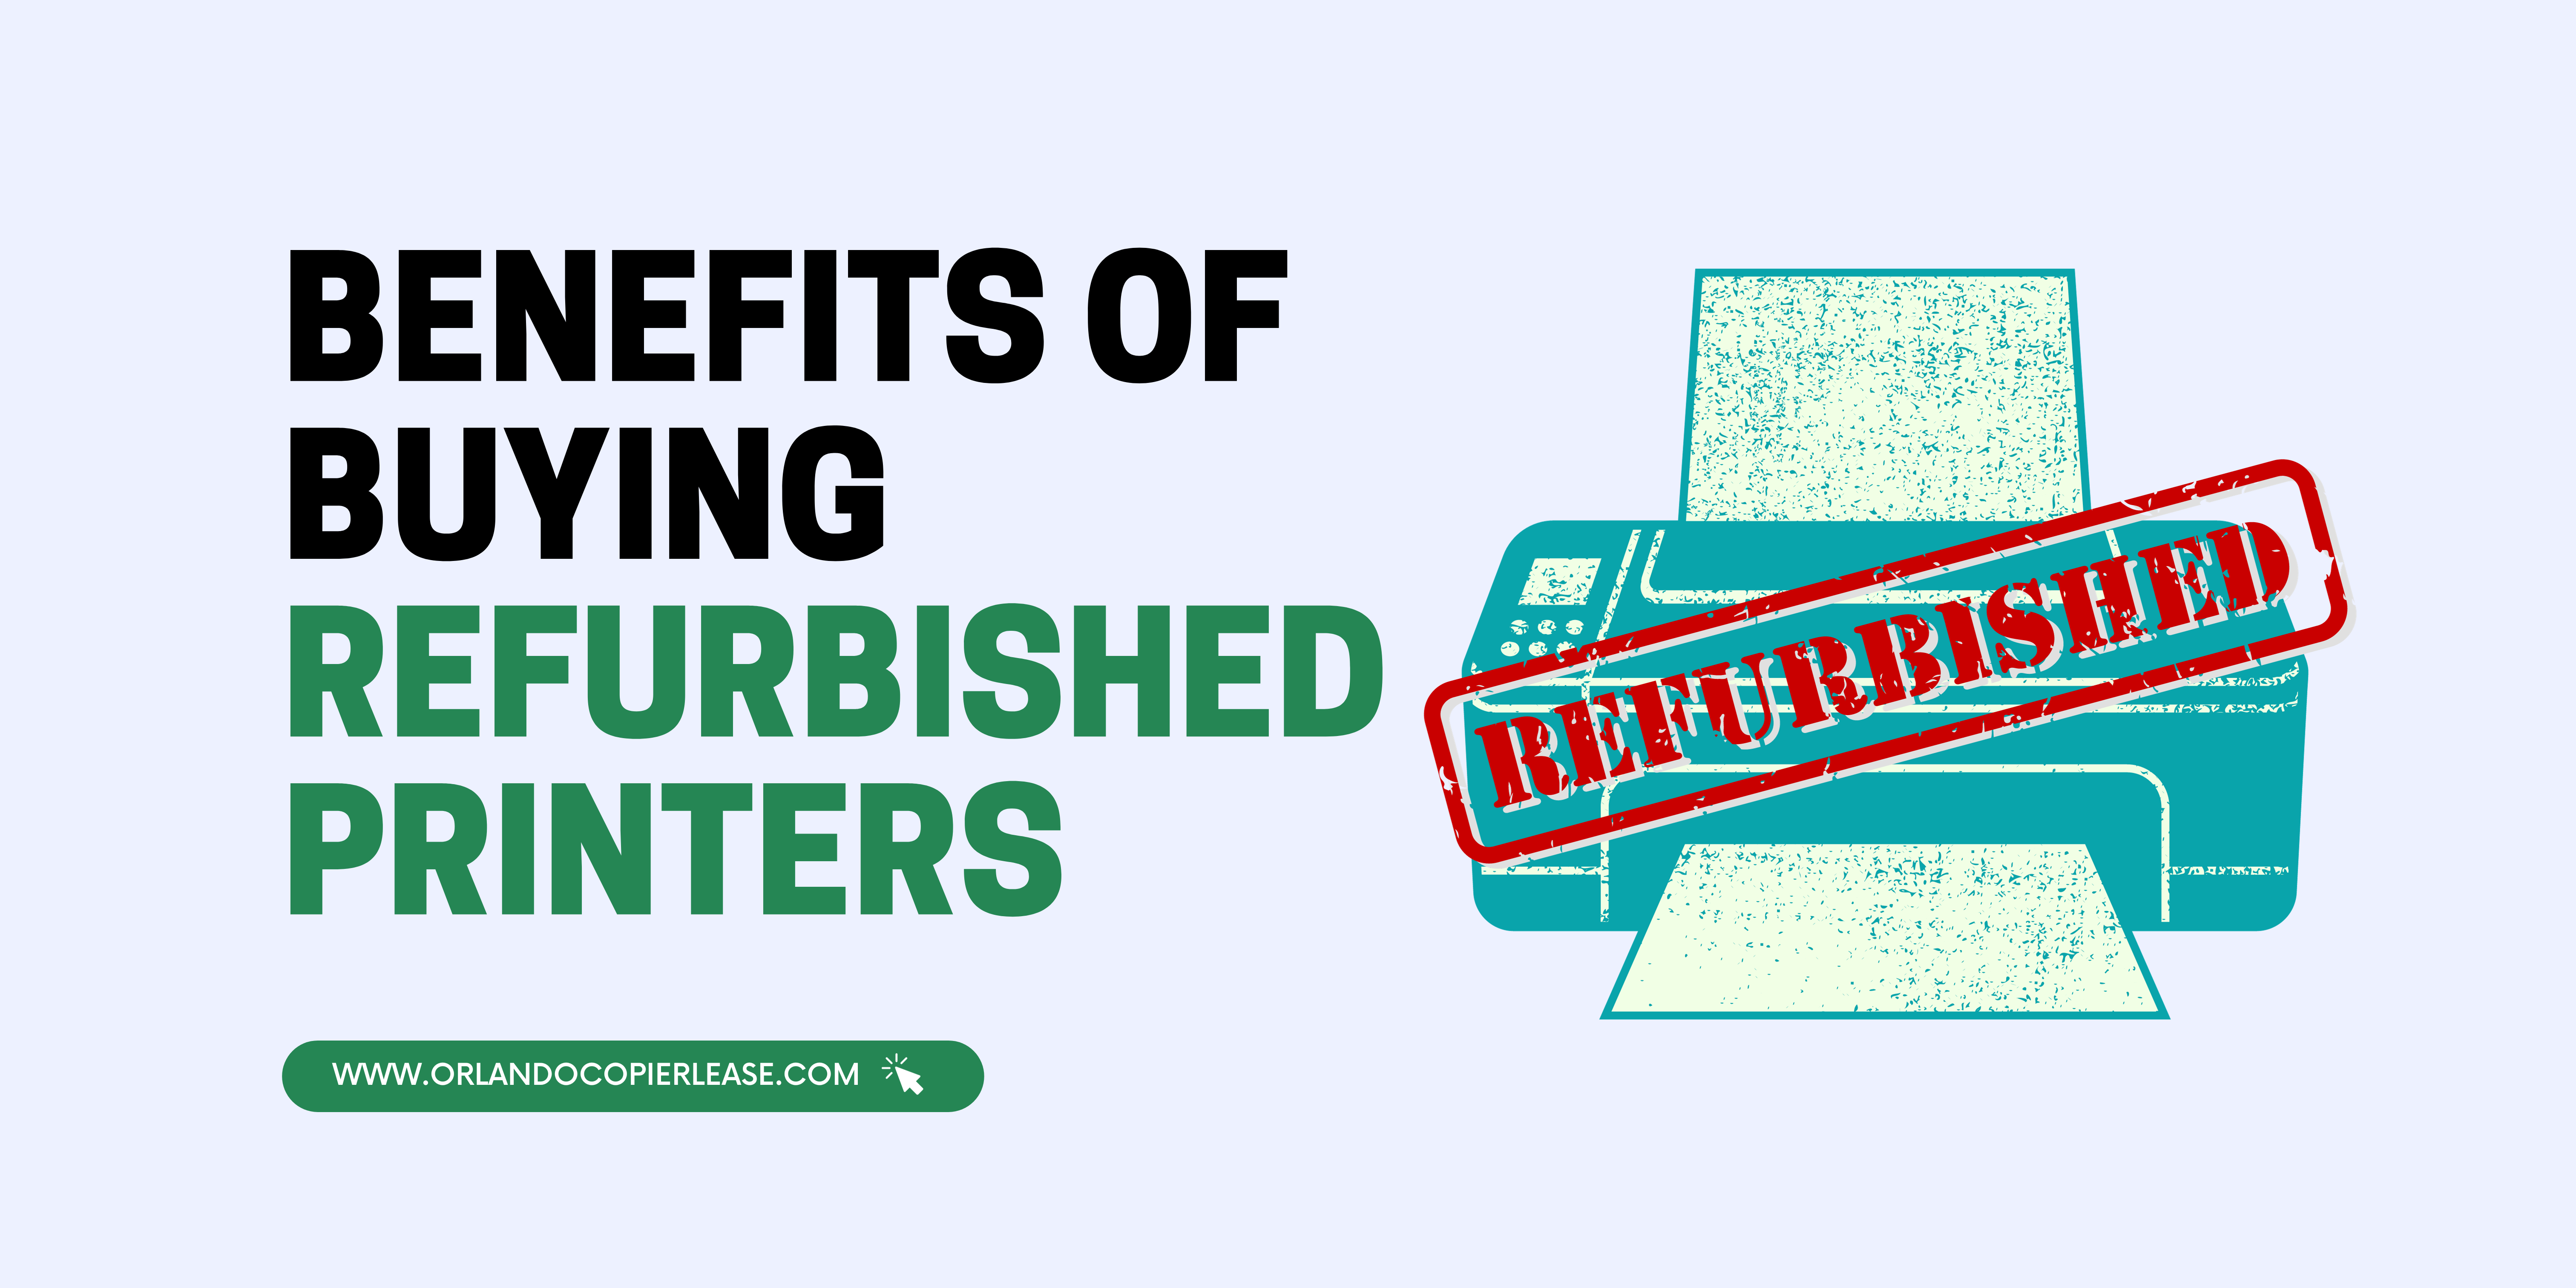 Benefits of Buying Refurbished Printers